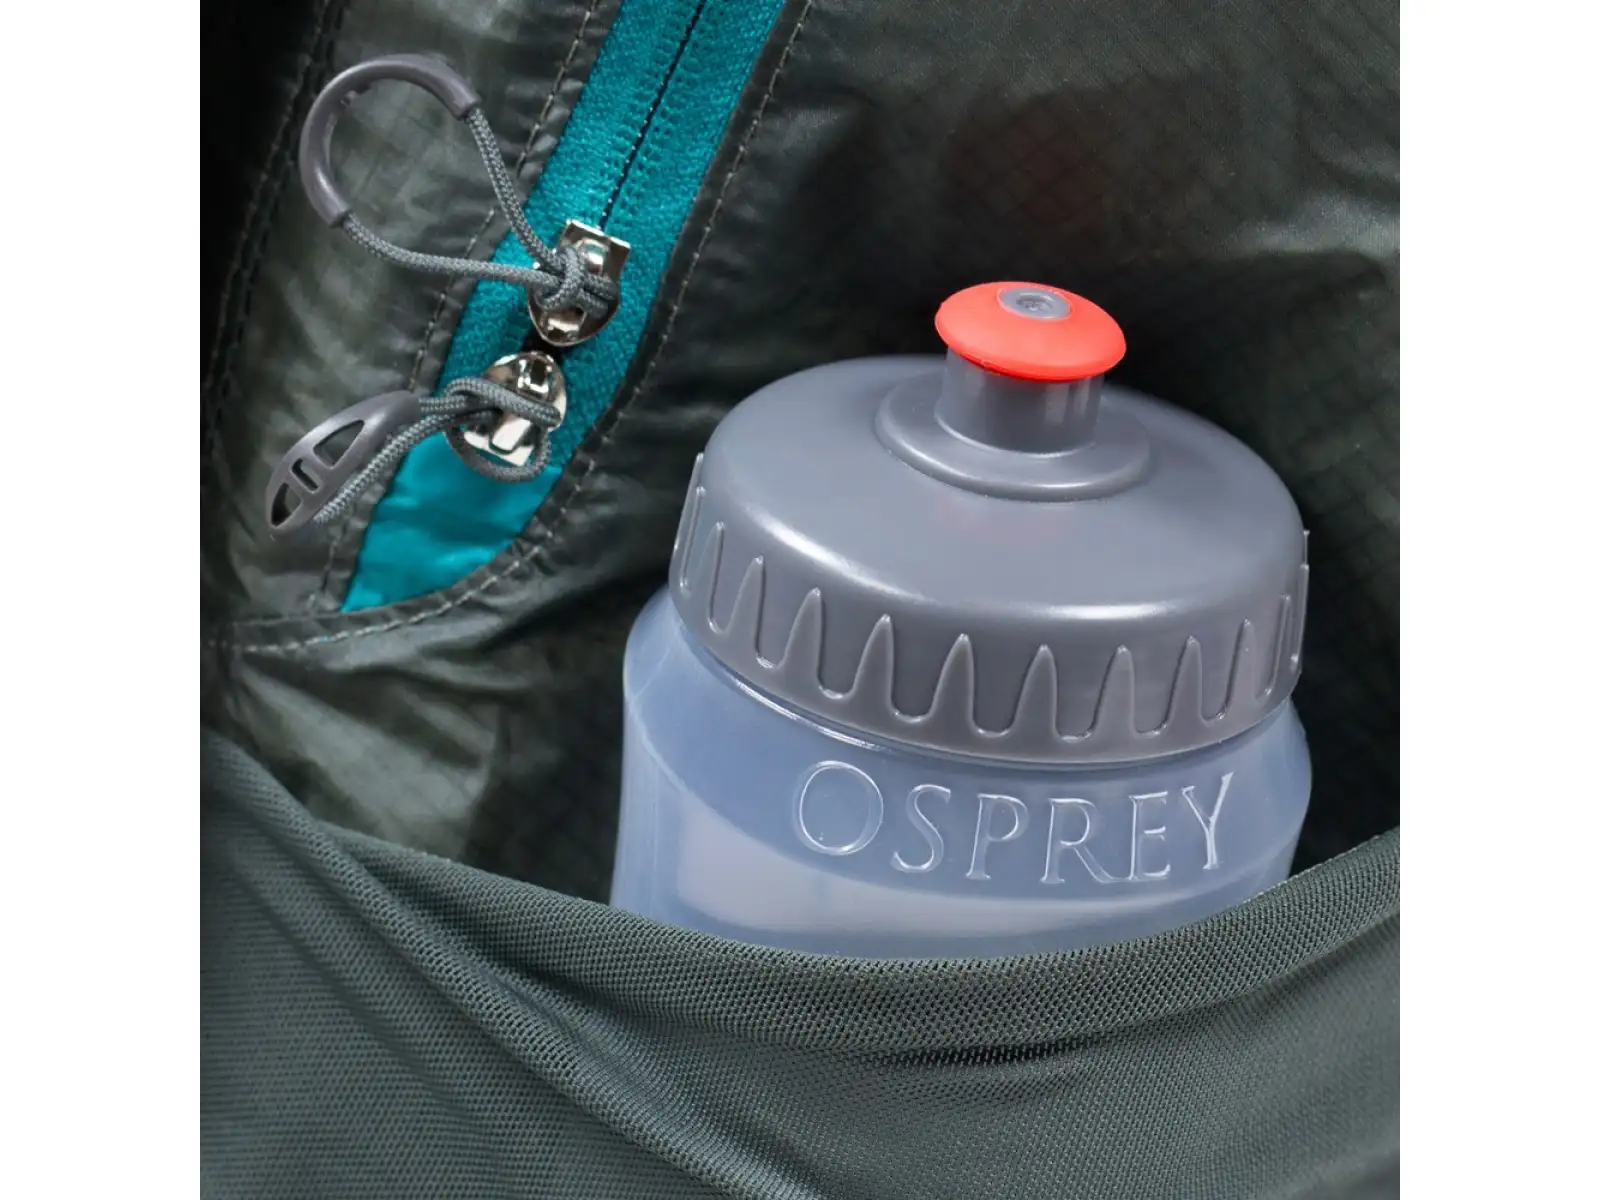 Osprey Ultralight Stuff Pack batoh tropical teal